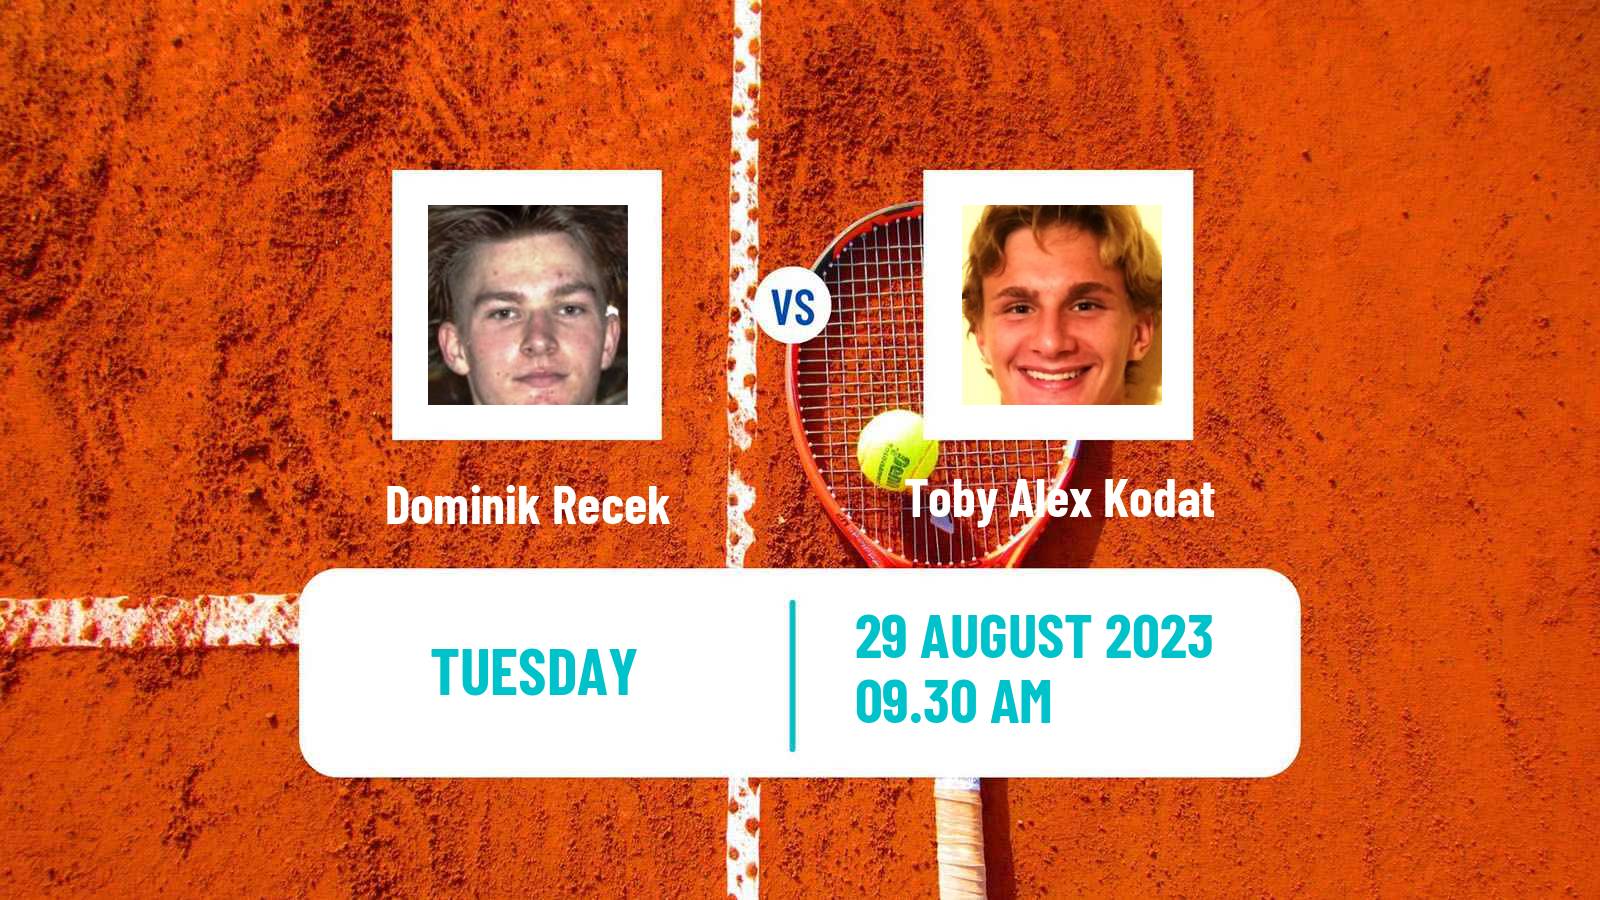 Tennis ITF M25 Jablonec Nad Nisou 2 Men Dominik Recek - Toby Alex Kodat